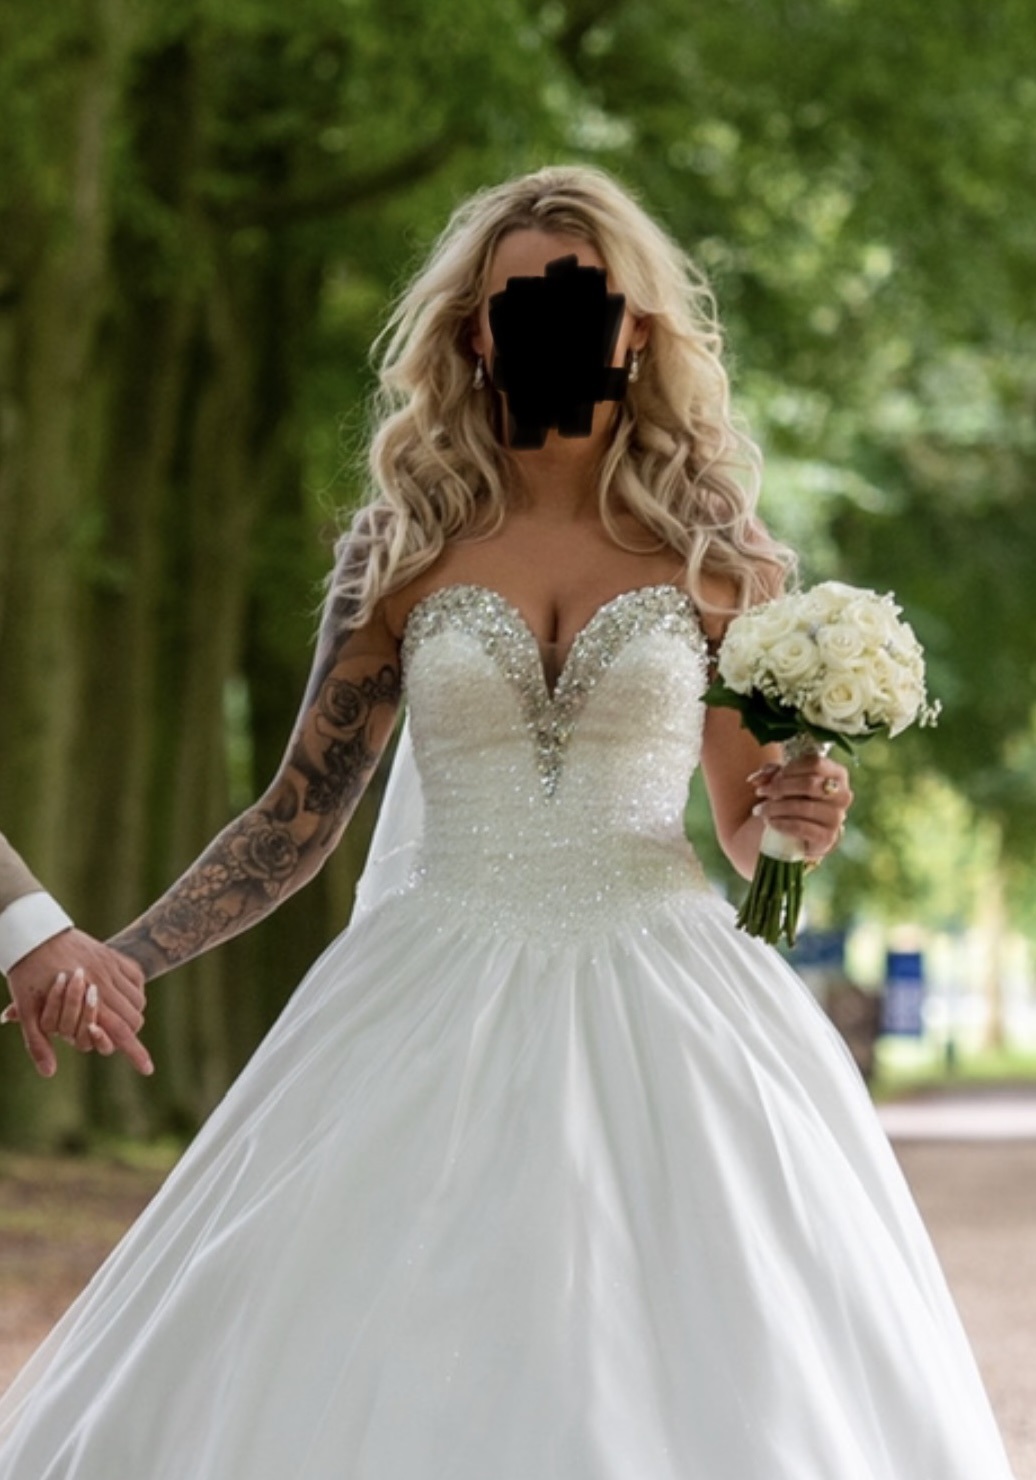 spek Poging Let op Prachtige Prinsessen trouwjurk glitter wit - Wedding Wonderland